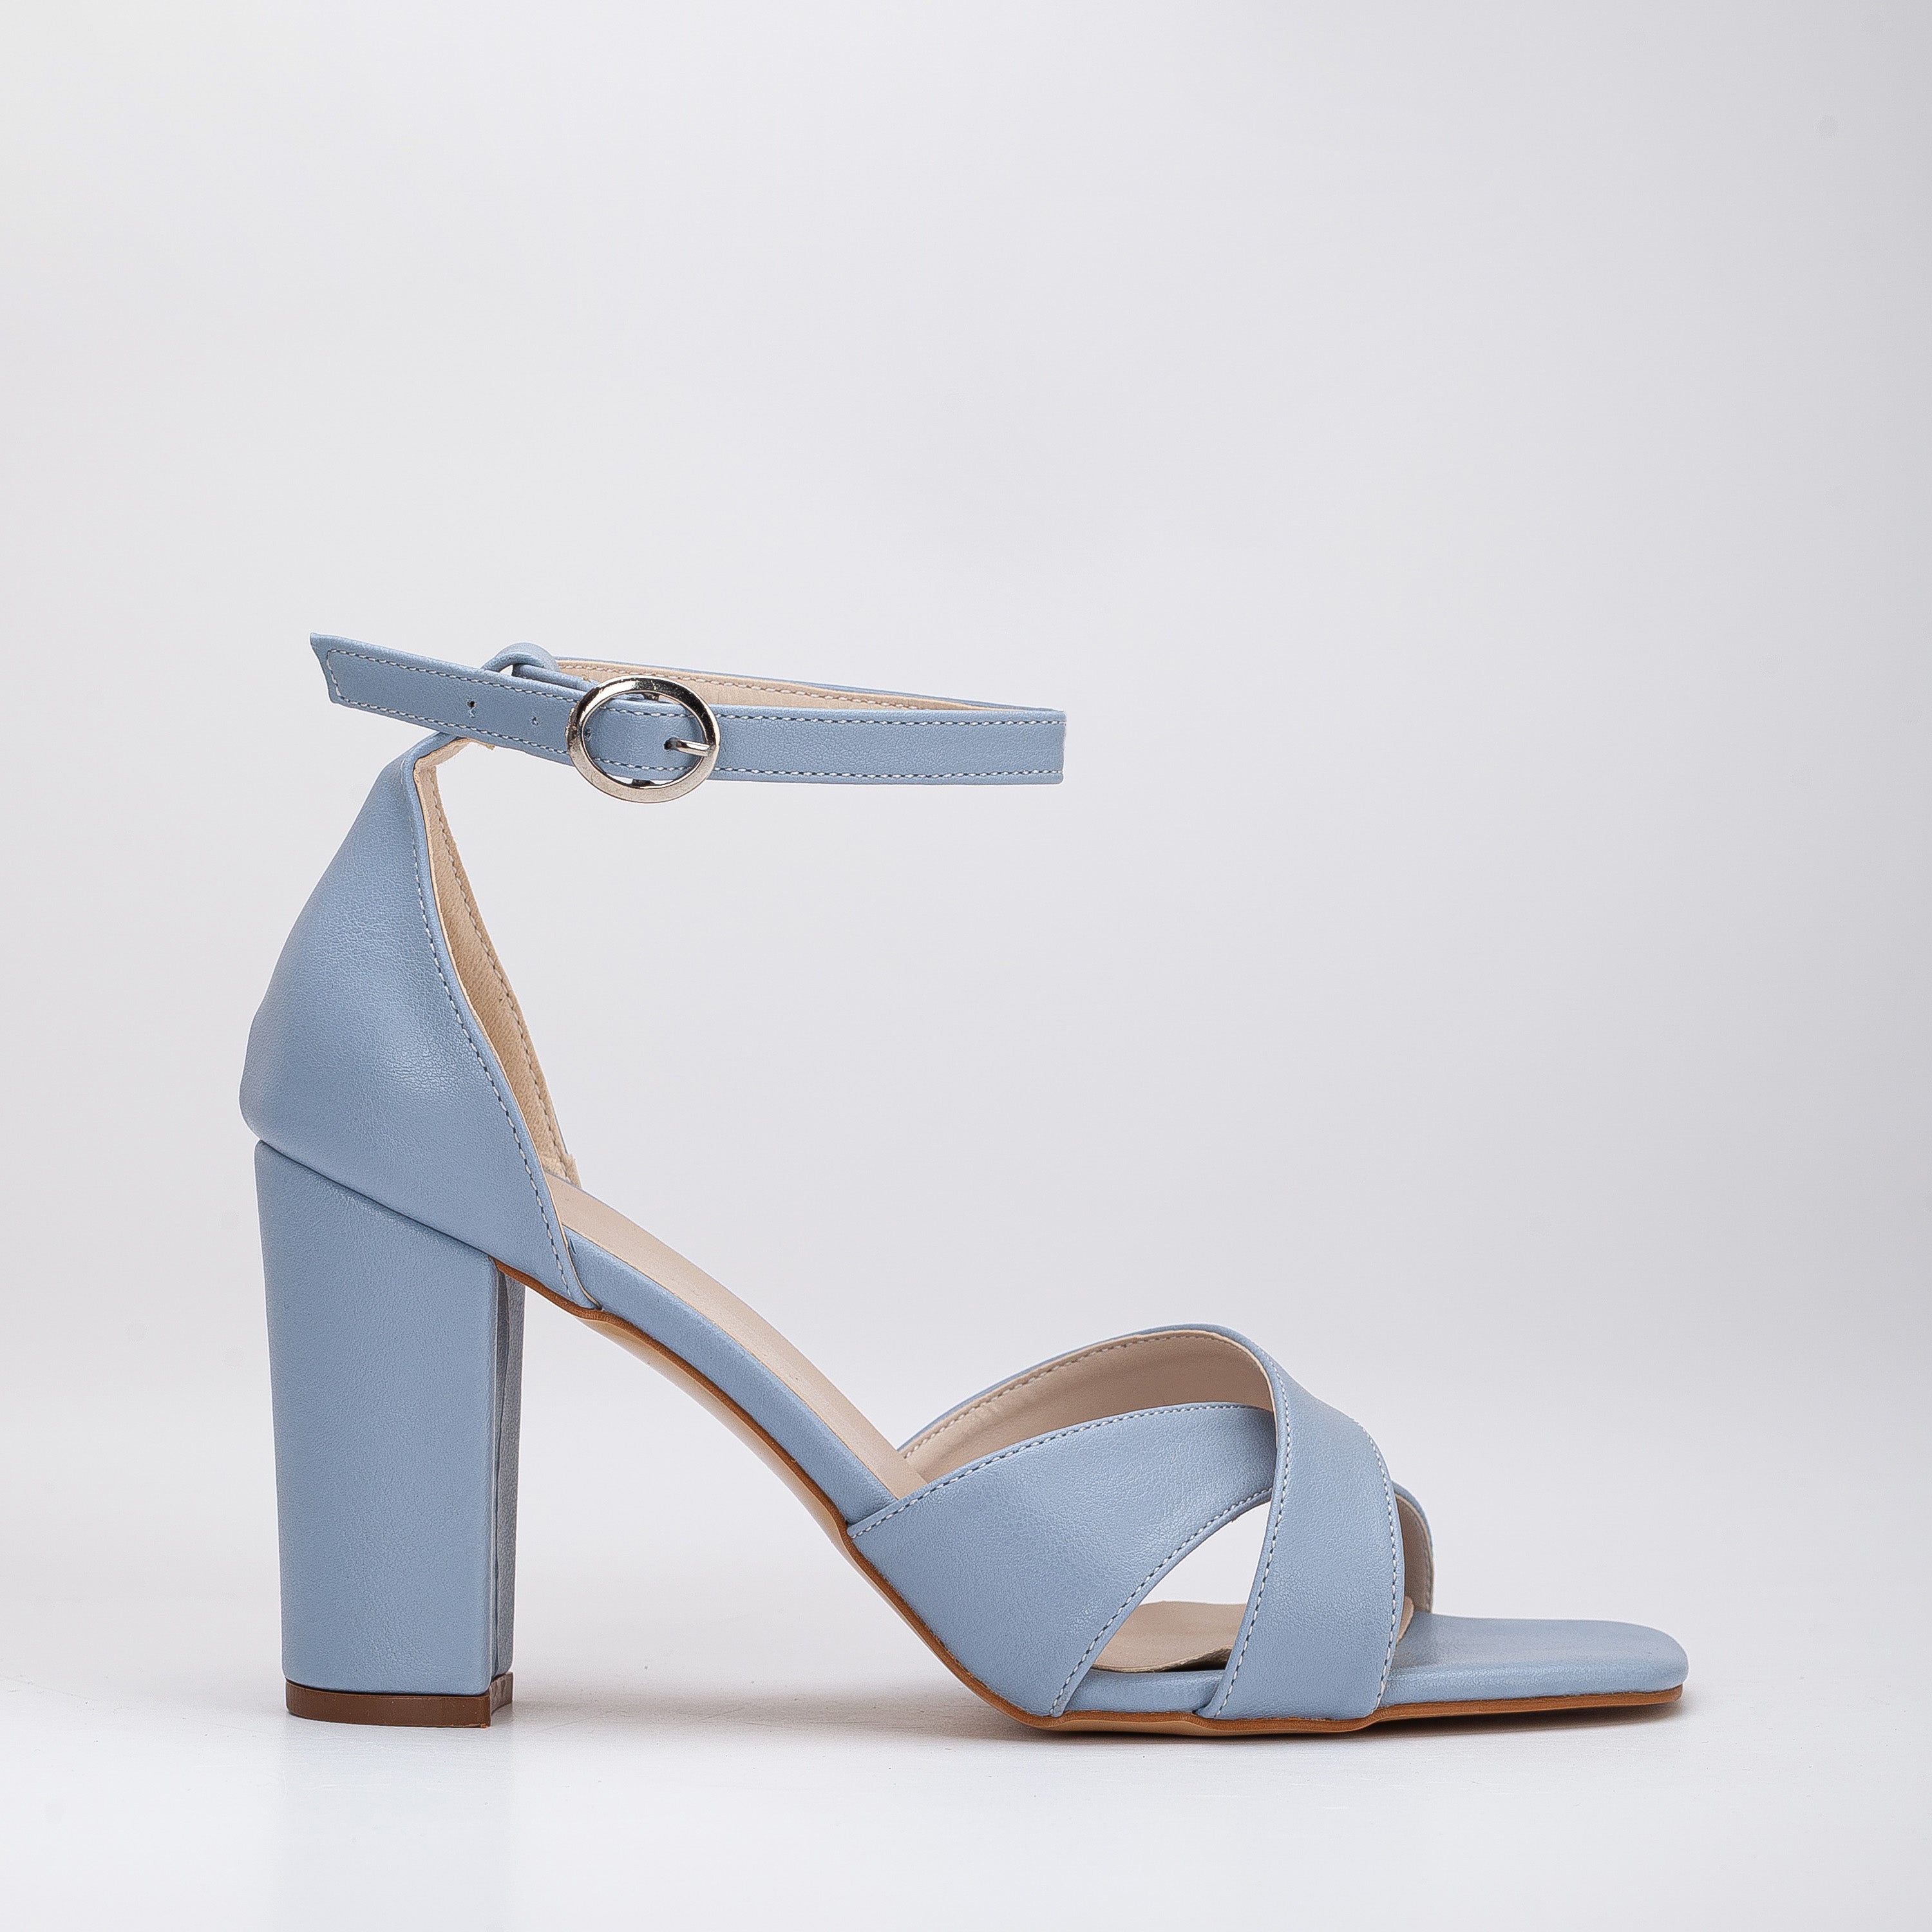 Incorporating Light Blue Heels into Your Work Wardrobe